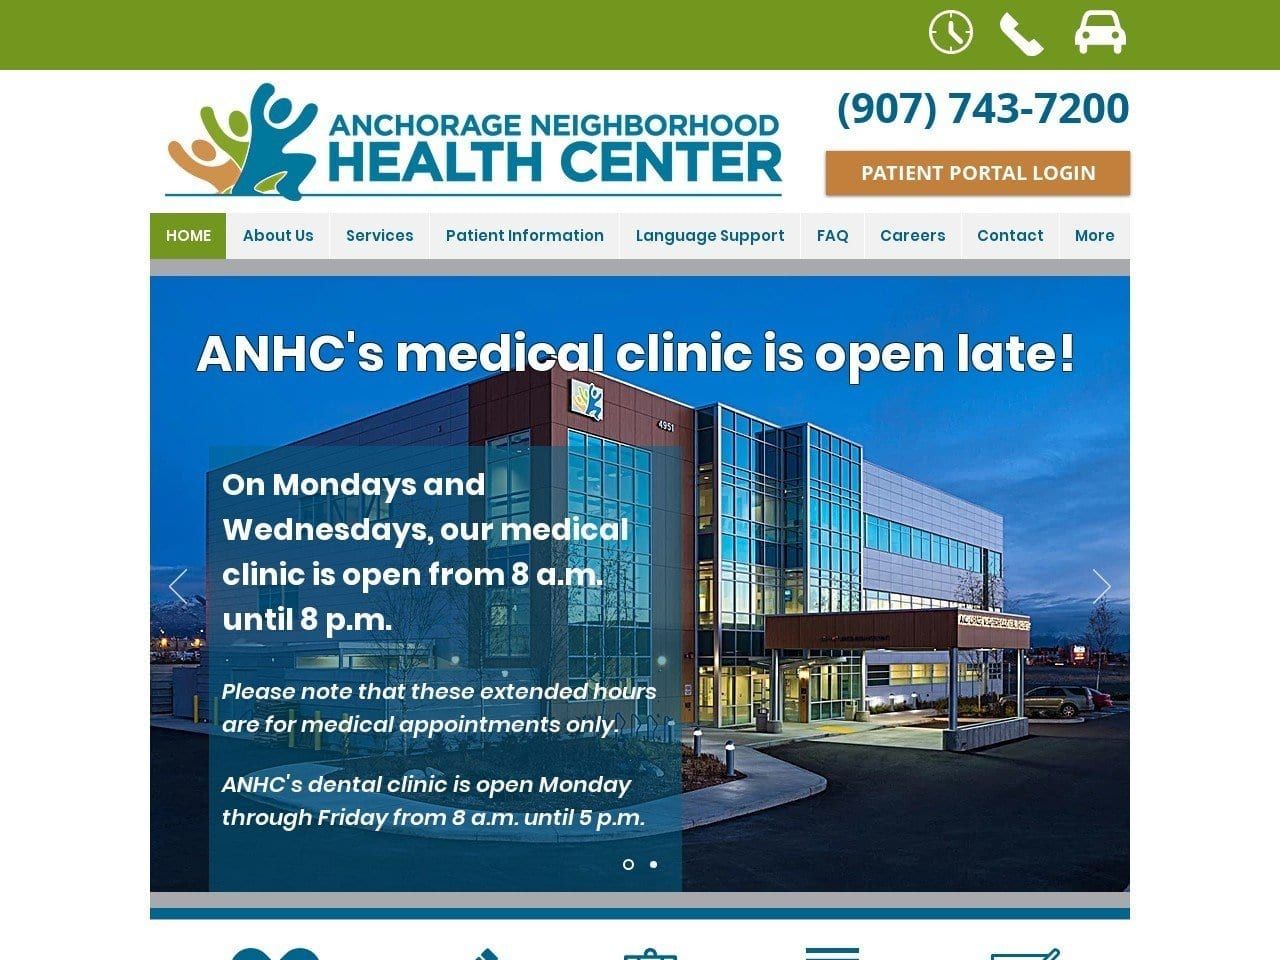 Anchorage Neighborhood Health Center Website Screenshot from anhc.org